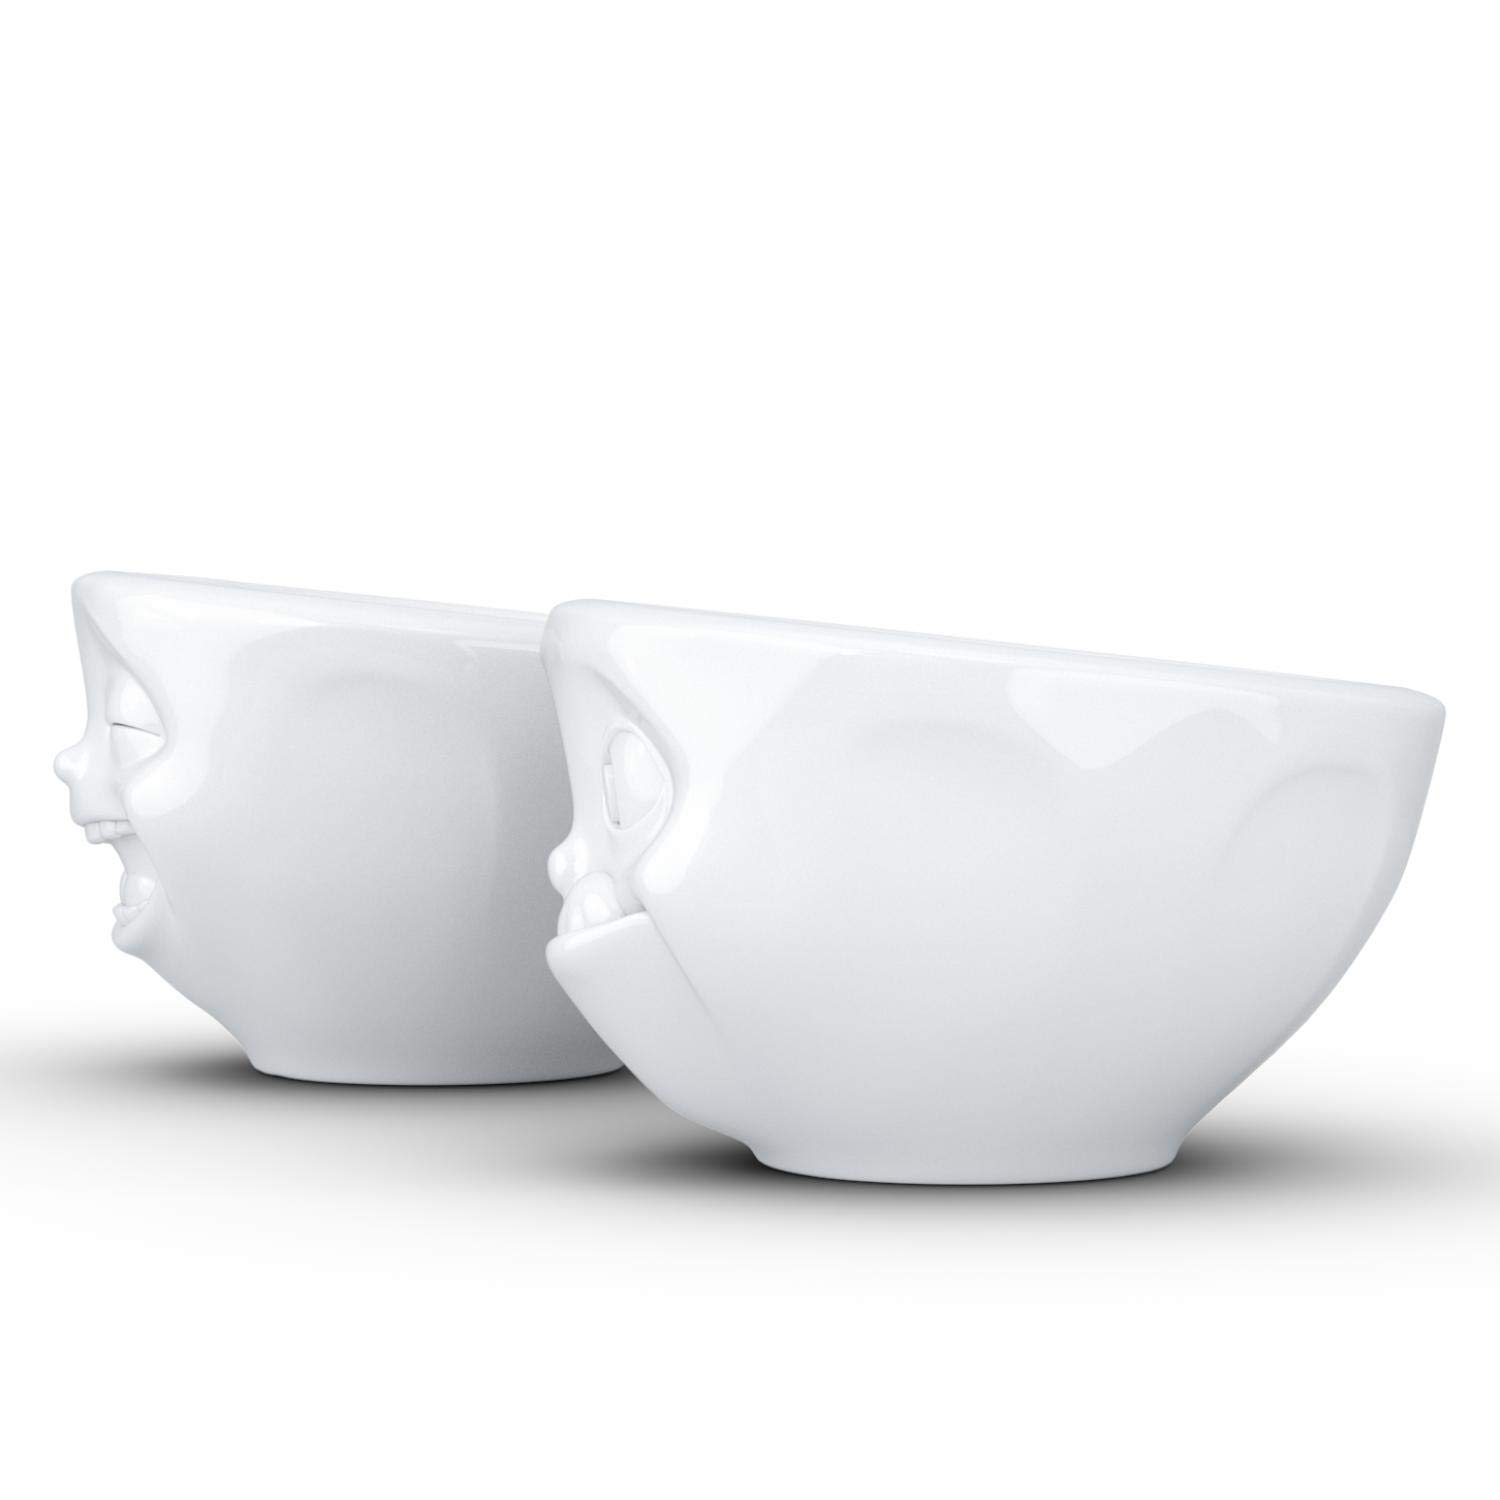 TASSEN Small Porcelain Bowl Set No. 3, Laughing & Tasty Face, 3.3 oz. White (Set of 2 Bowls)